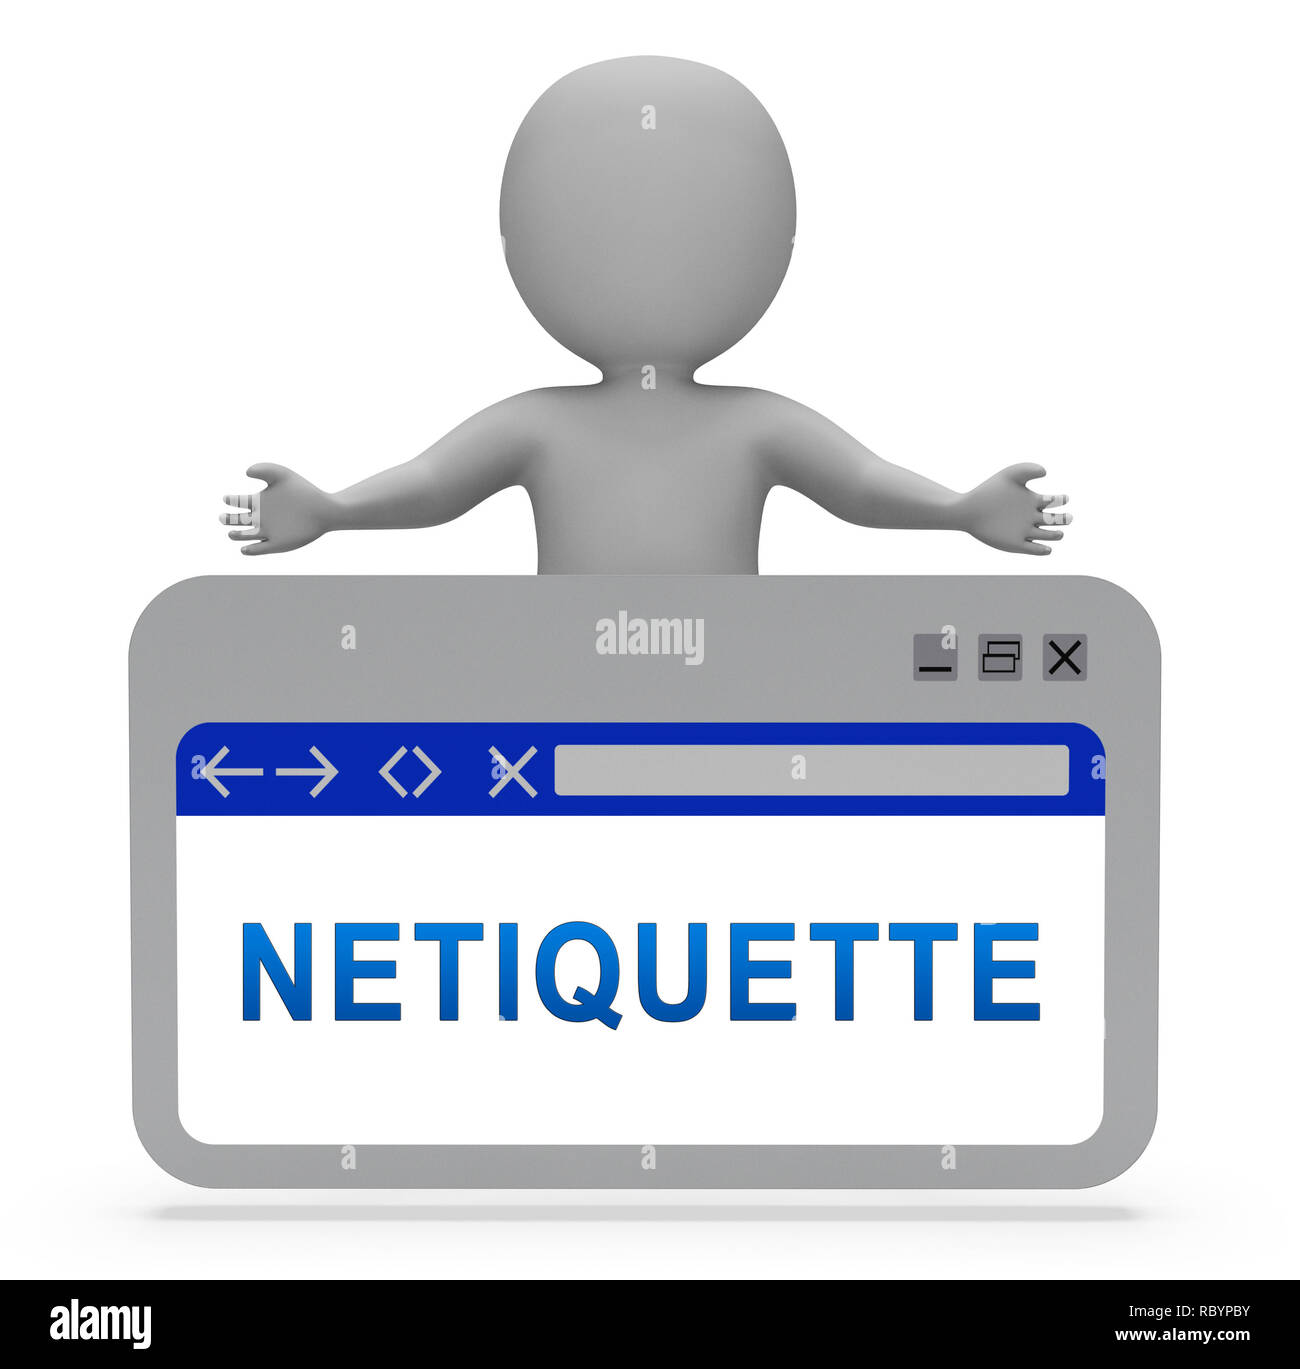 Netiquette Polite Online Conduct Or Web Etiquette. Civility Protocol On Networks And Tech - 3d Illustration Stock Photo